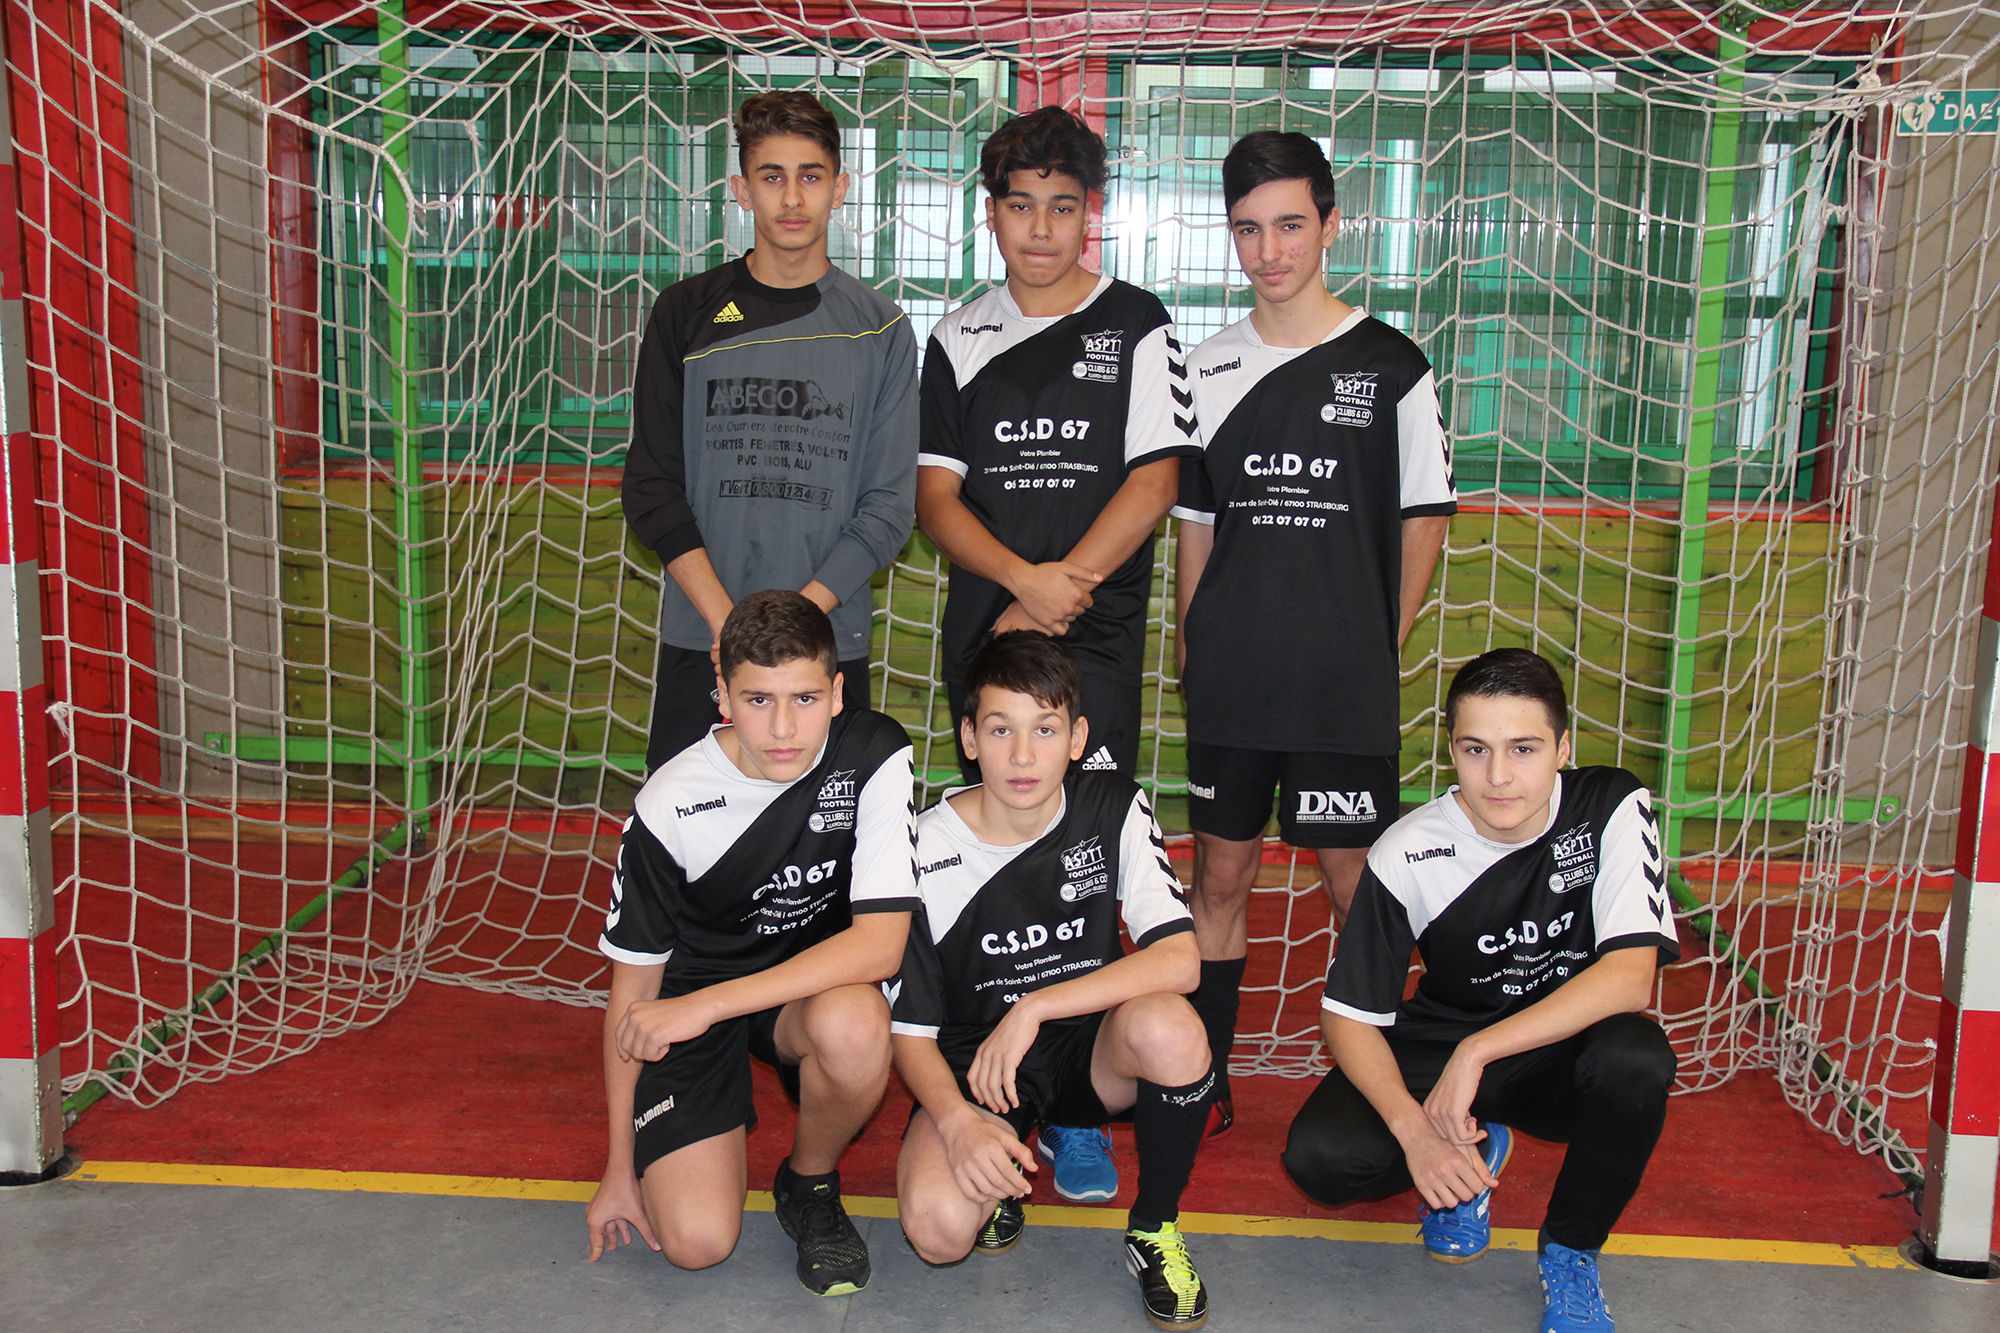 Tournoi Futsal Association AMI Hautepierre 17